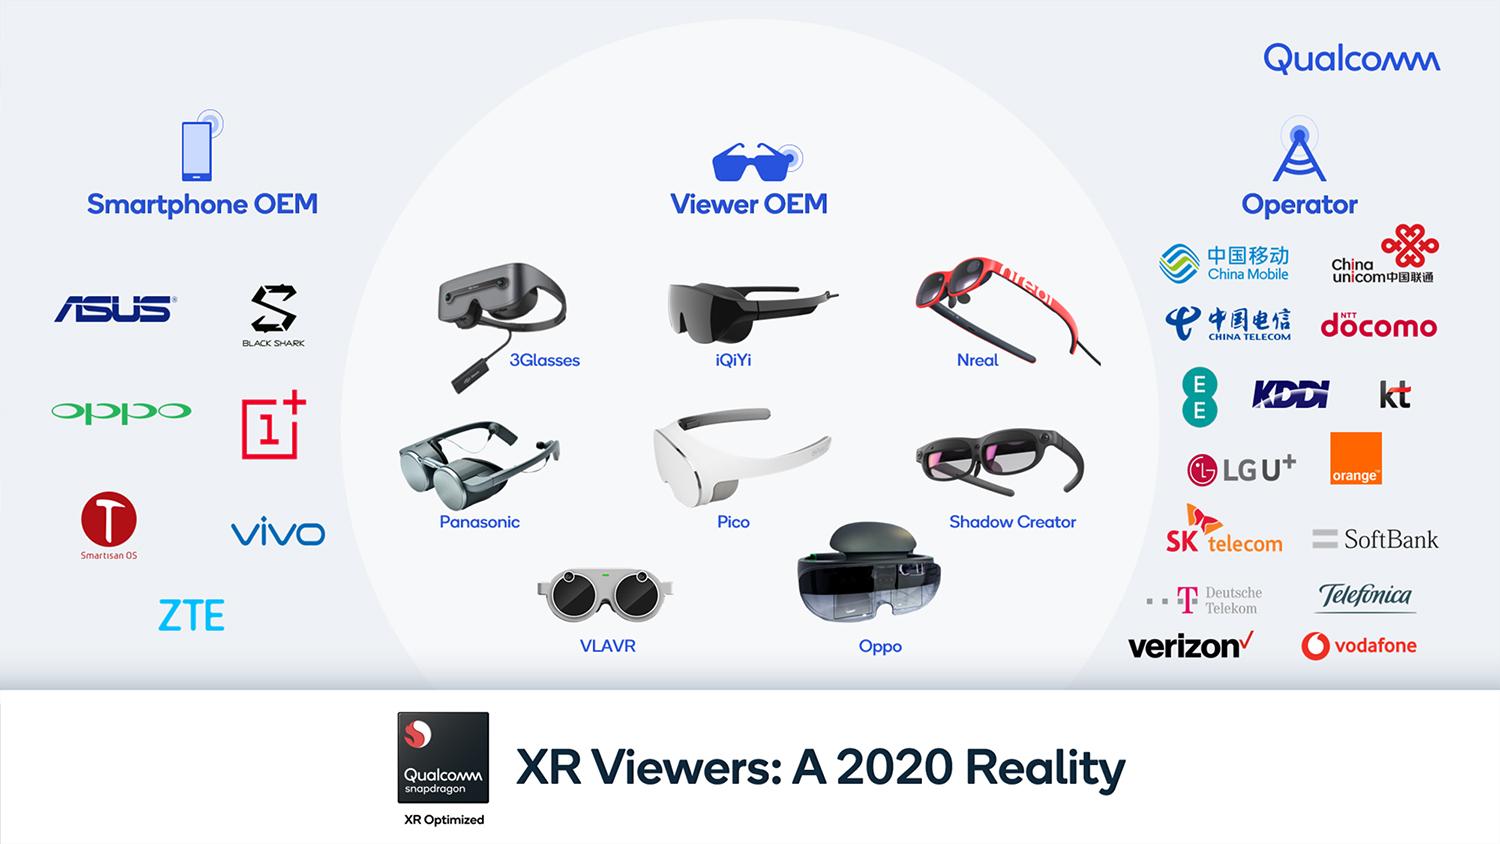 I visori di super realtà aumentata Qualcomm XR arrivano nel 2021